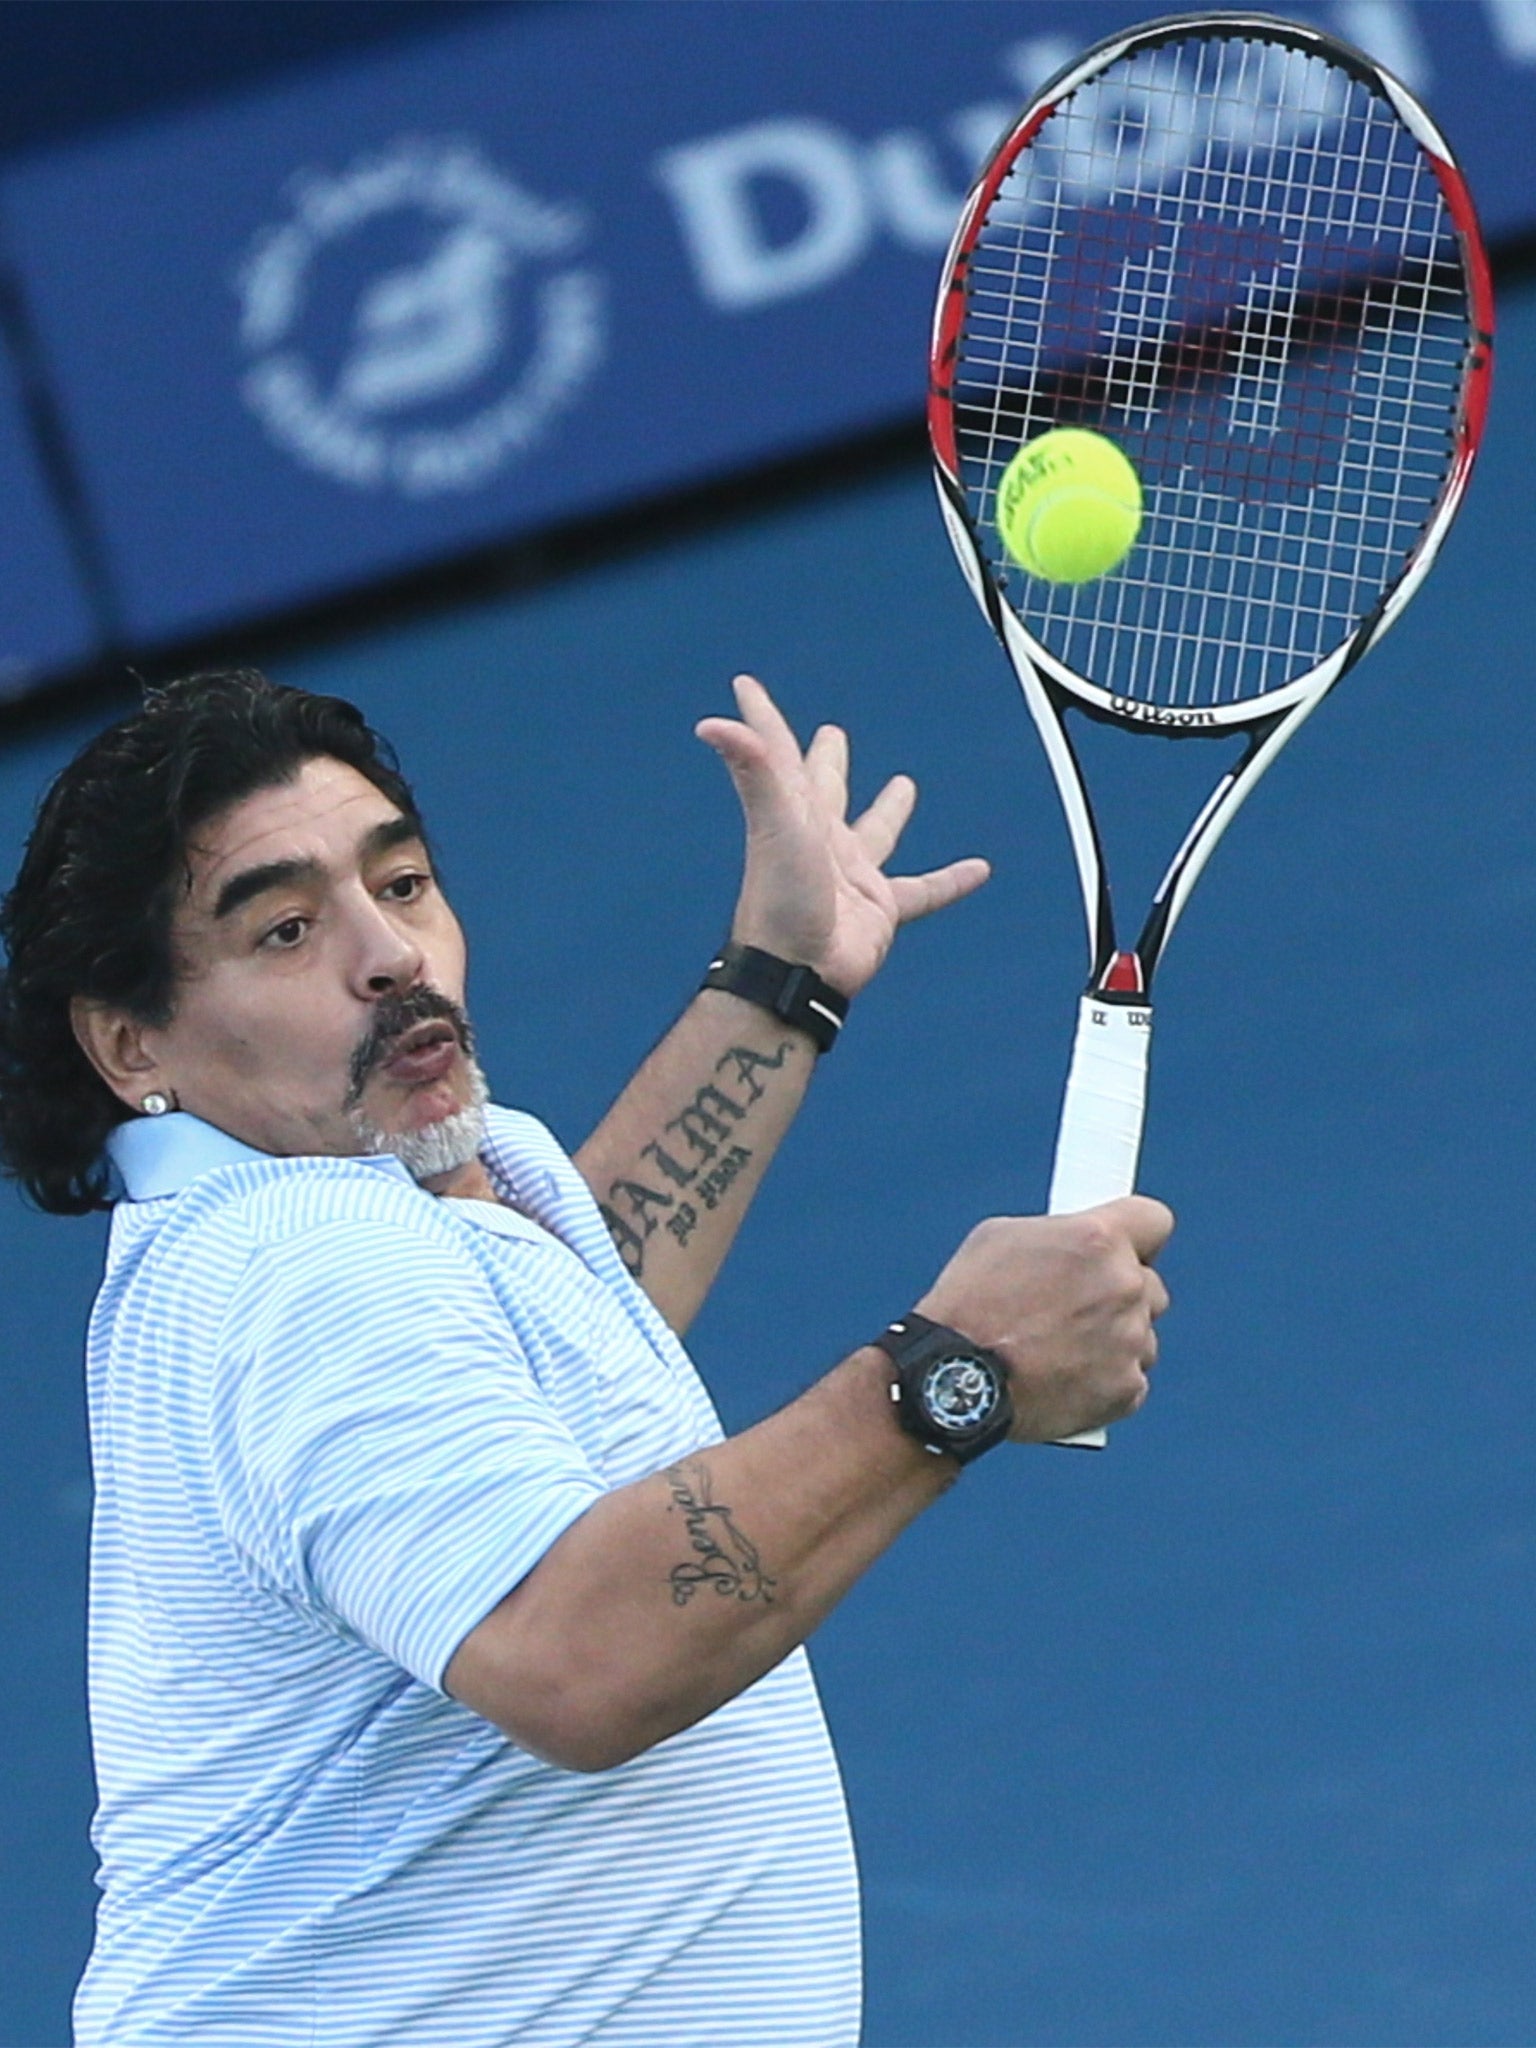 Maradona enjoys a whole new ball game